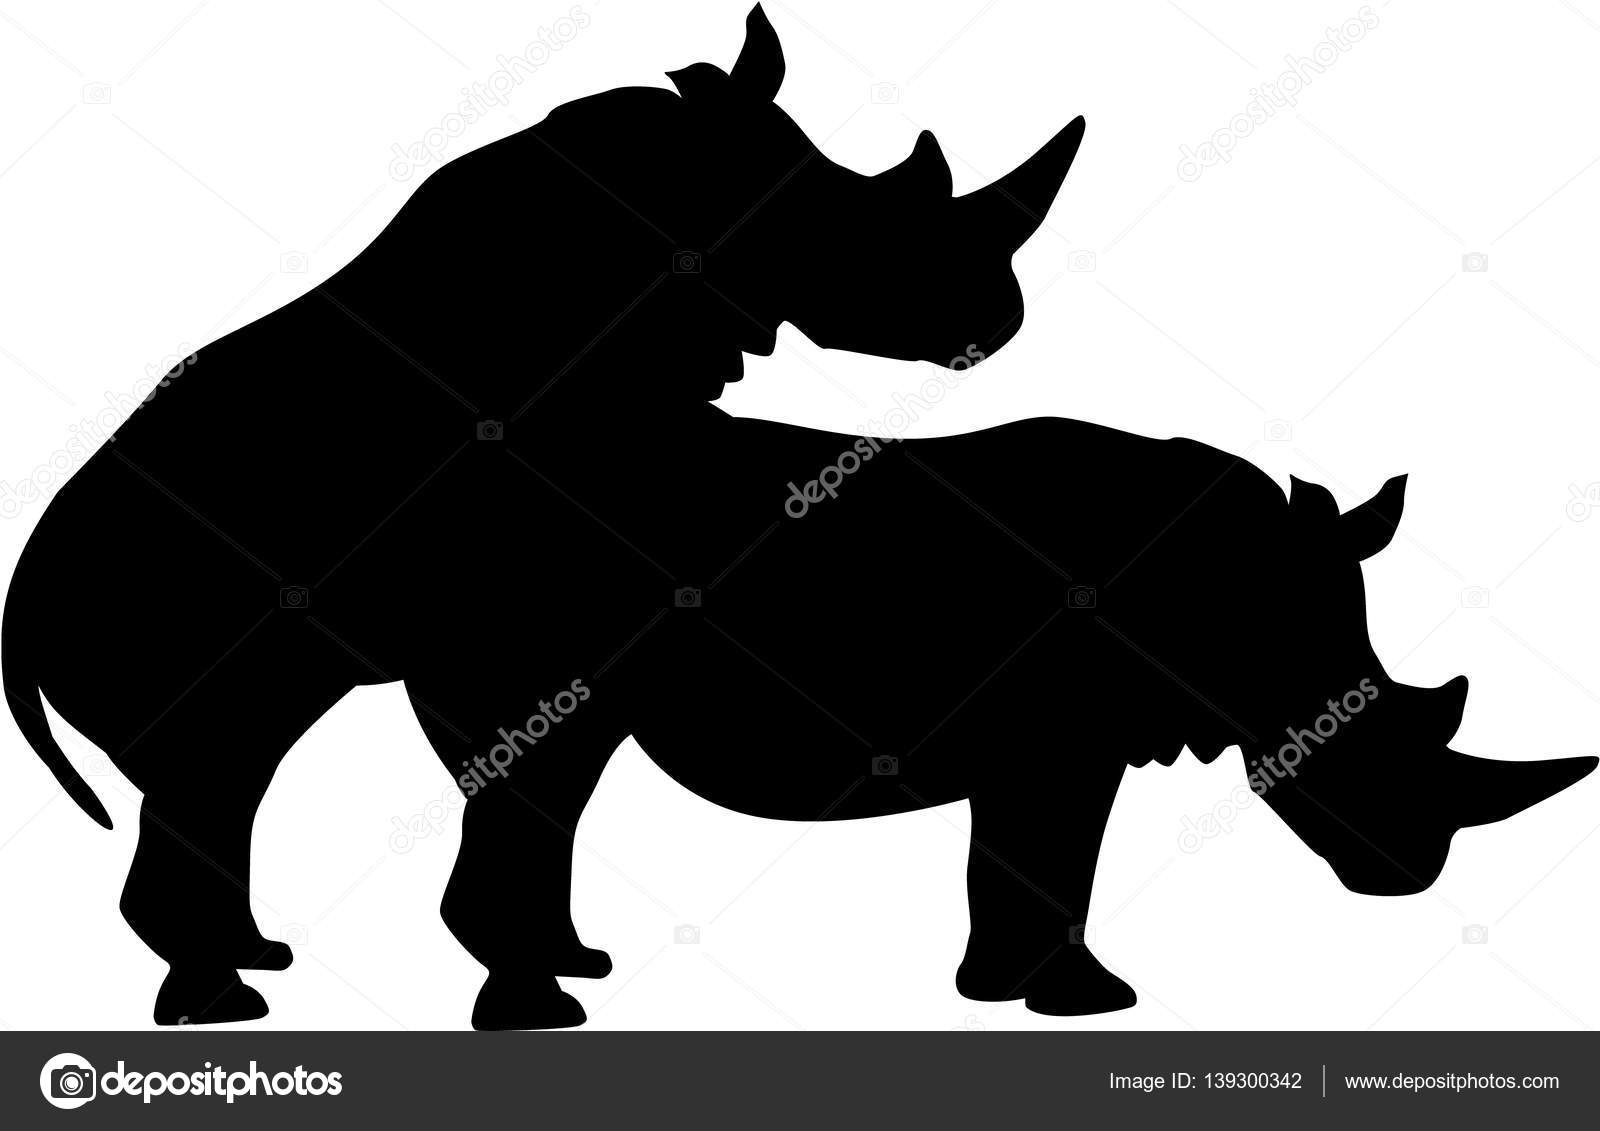 Download - Rhinoceroses having sex rhino - Stock Illustration. 